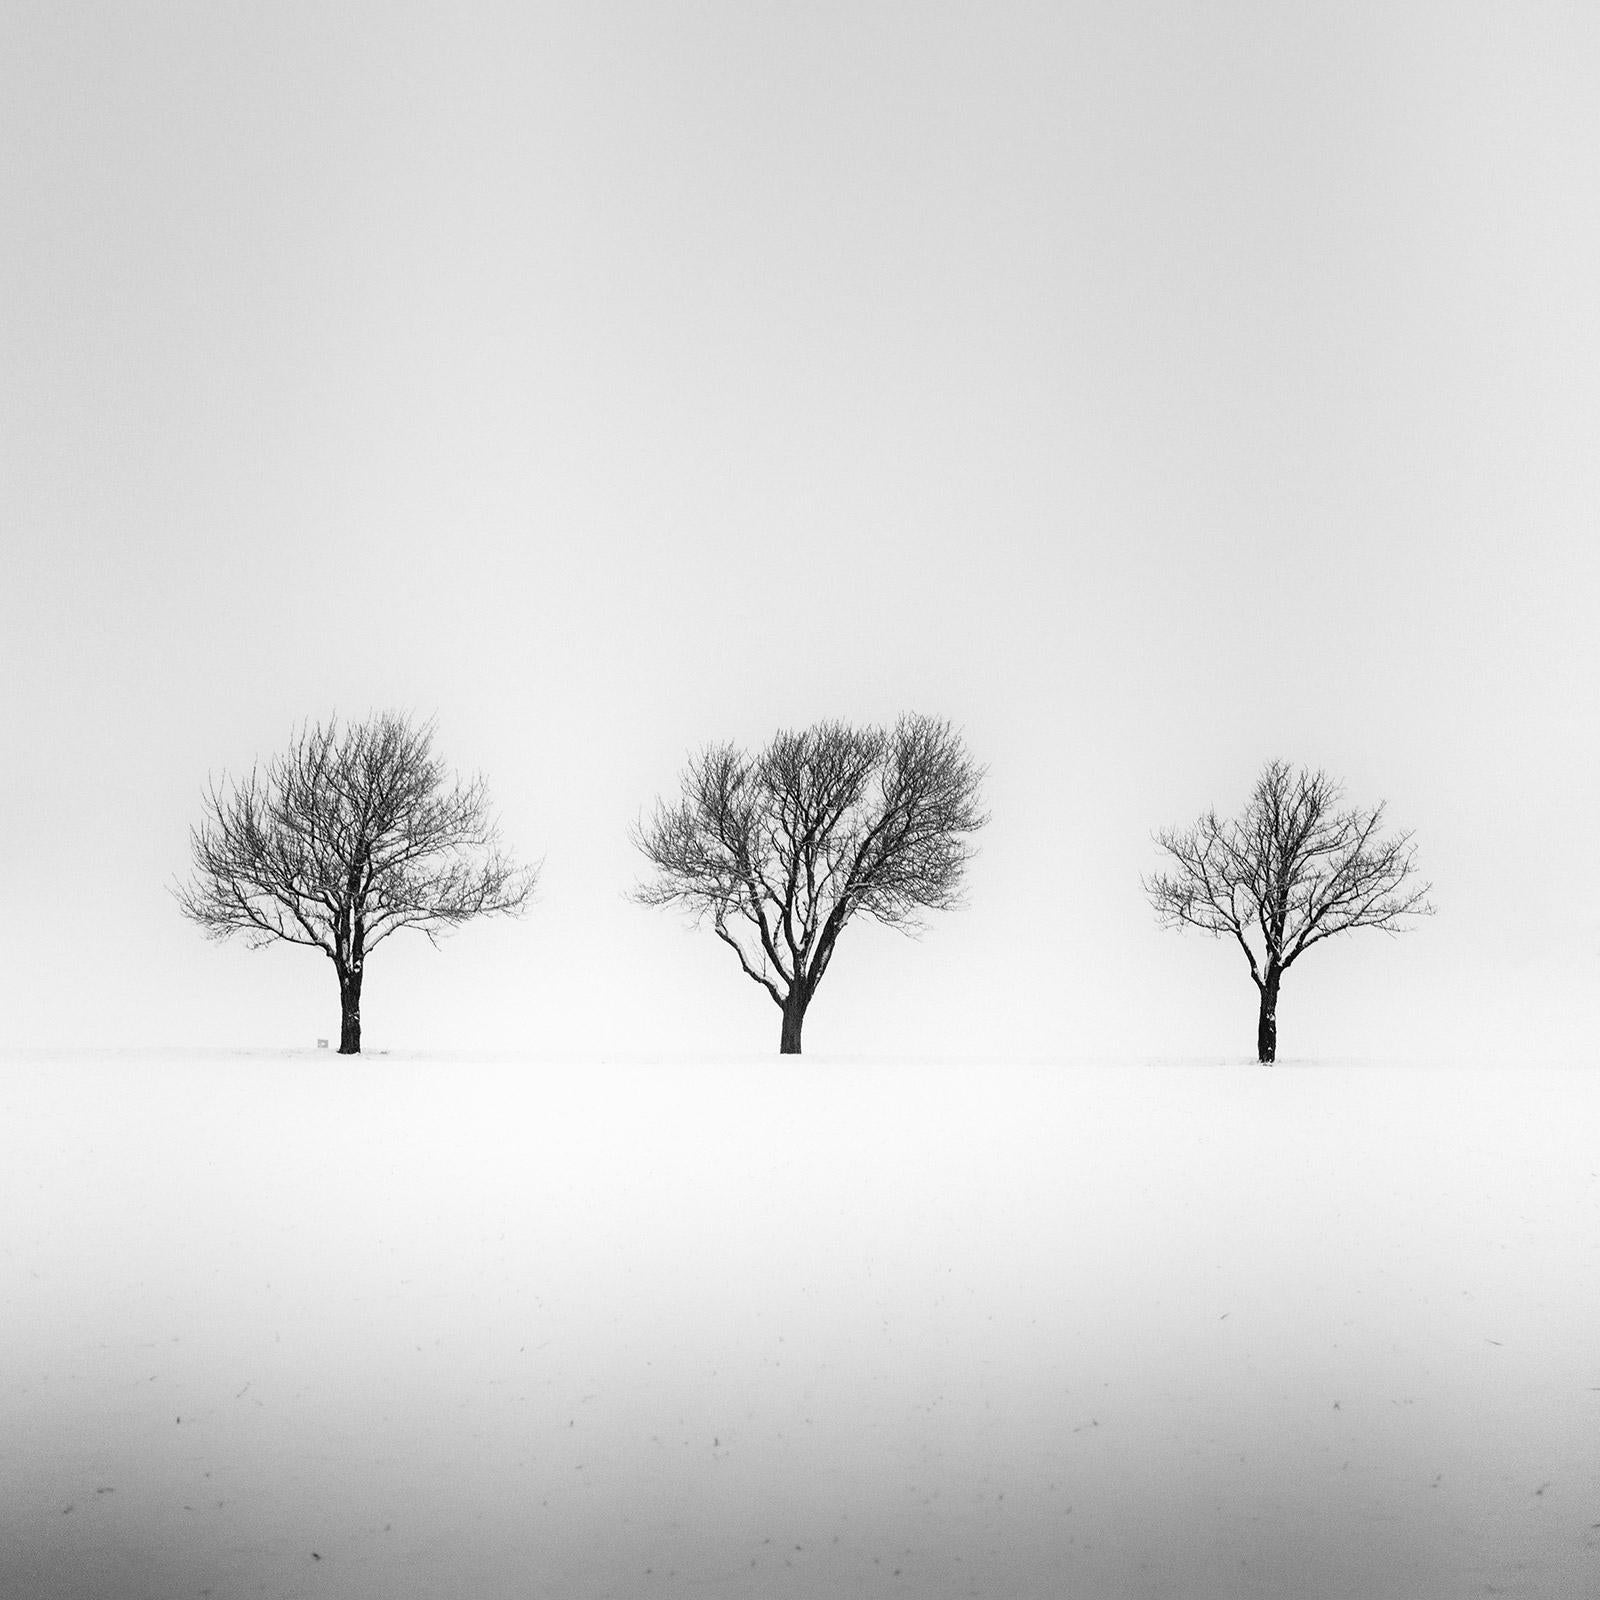 Gerald Berghammer Landscape Photograph – Trees in snowy Field, Winterland, Schwarz-Weiß-Fotografie, Kunst, Landschaft